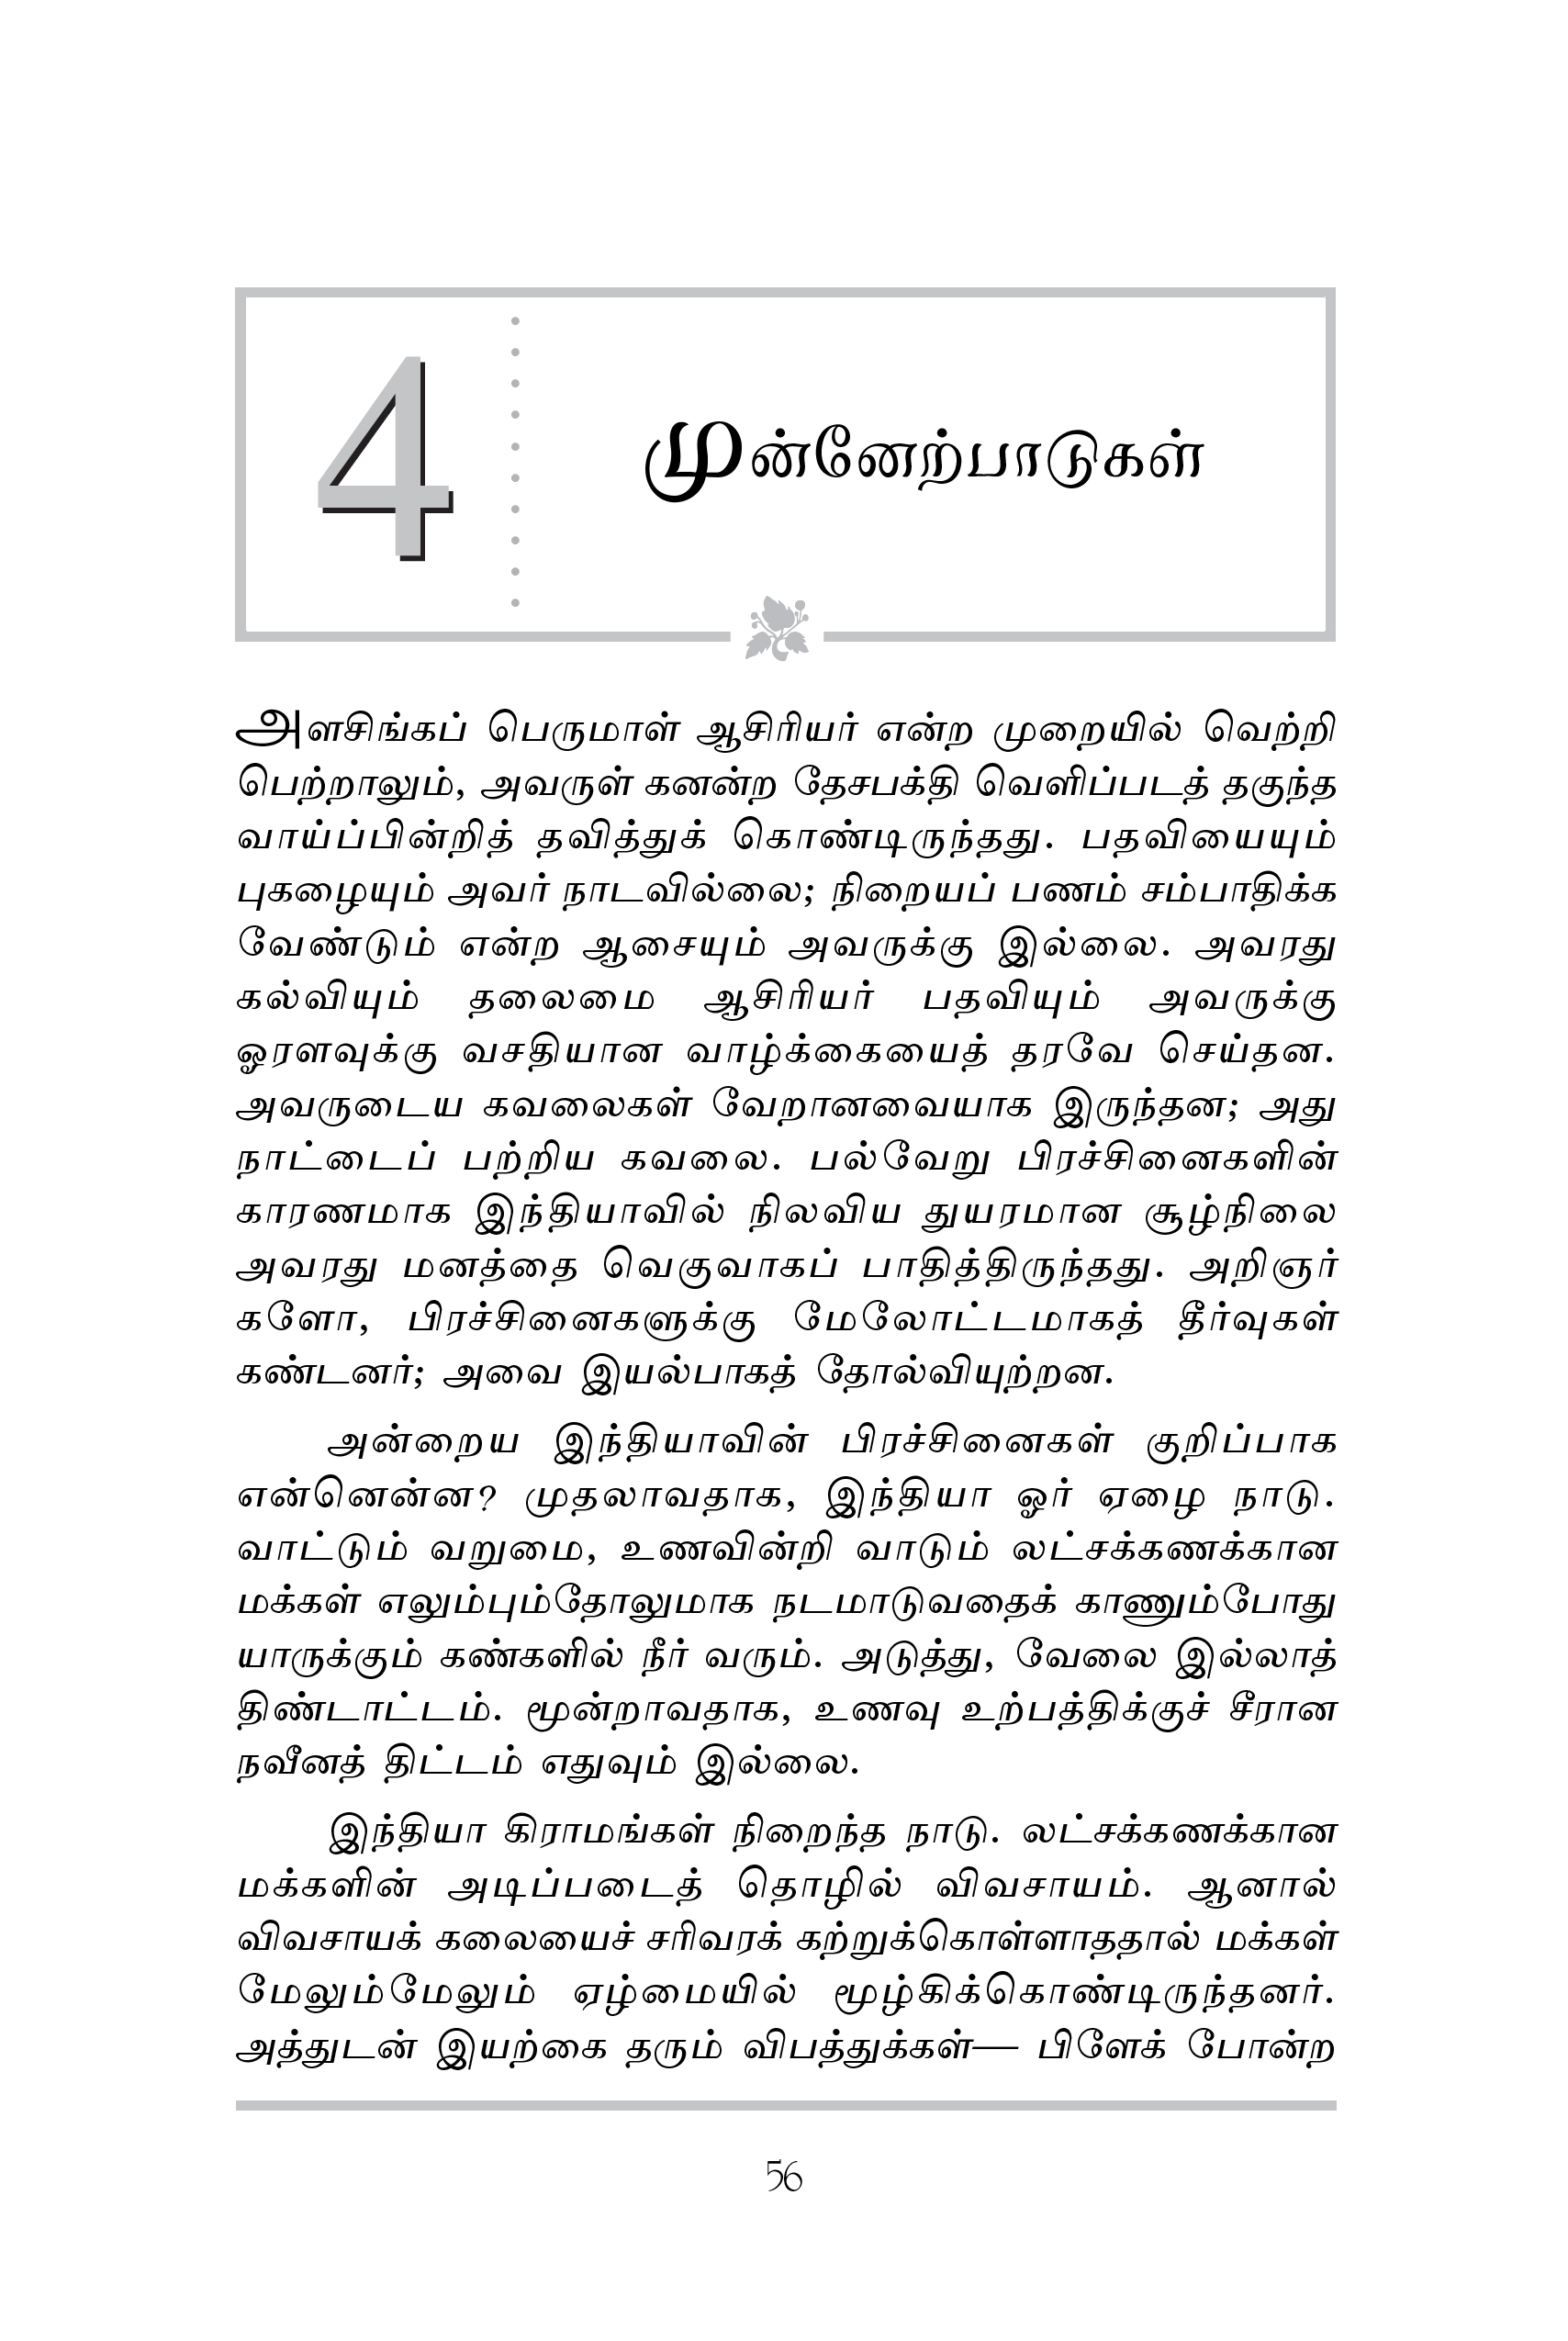 Alasinga Perumal Swami Vivekanandarin Arumai Seedar (Tamil)